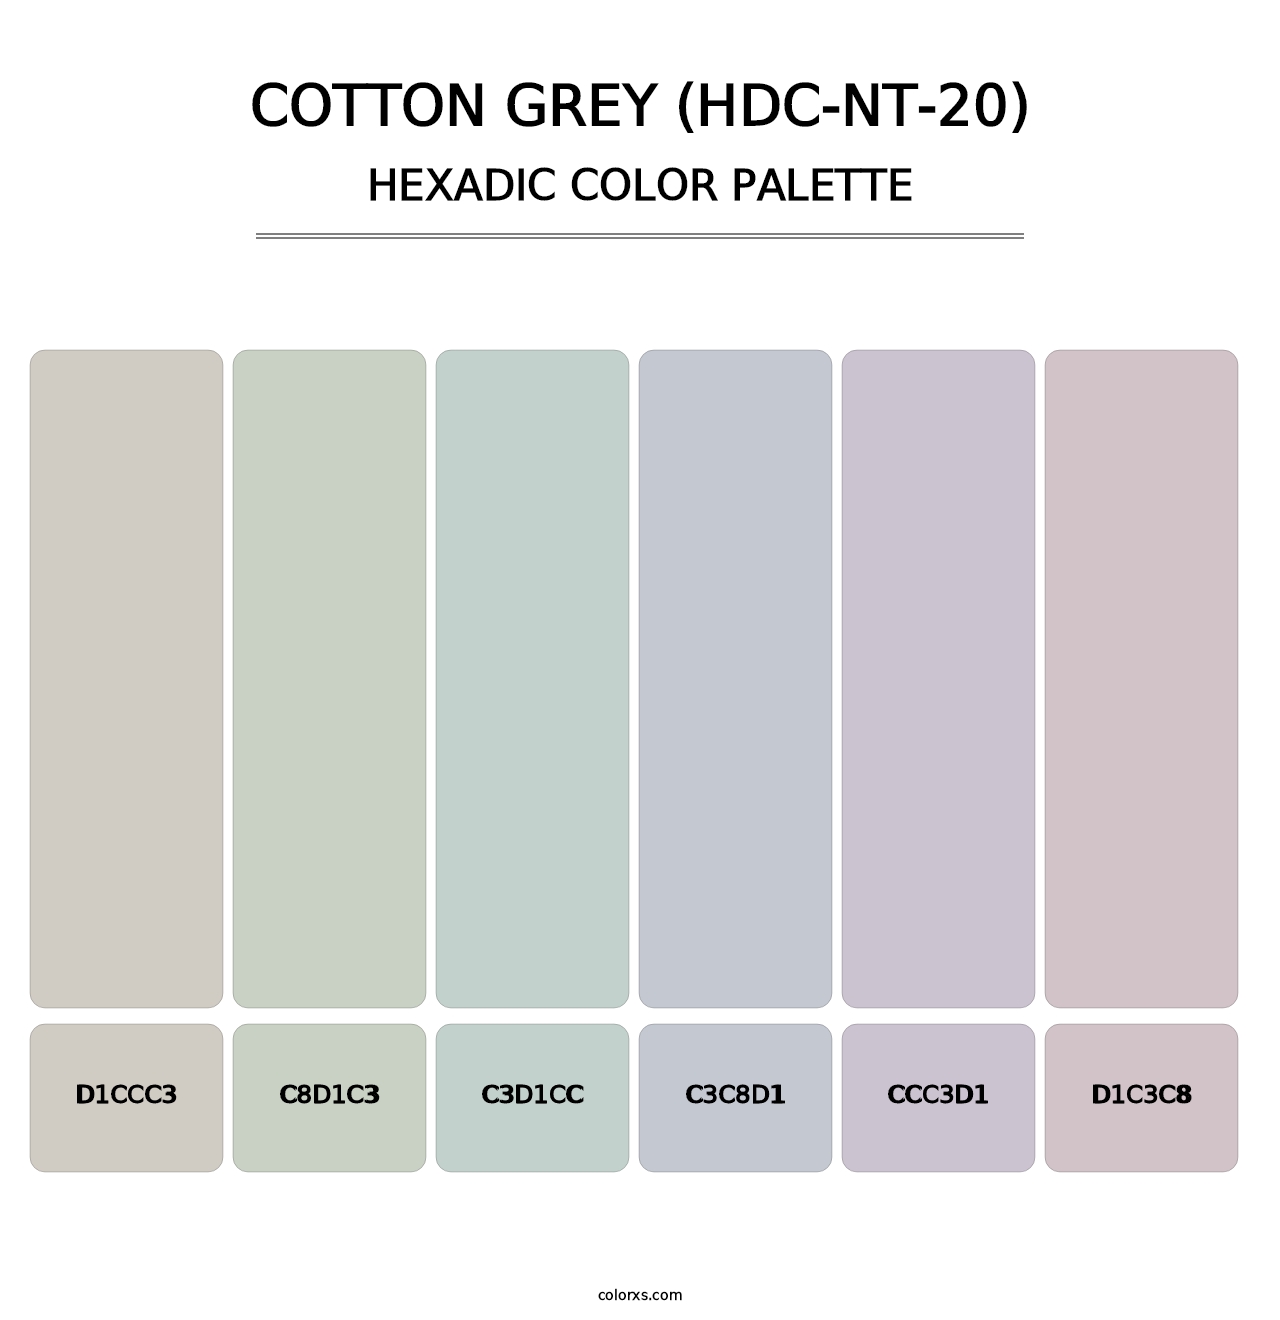 Cotton Grey (HDC-NT-20) - Hexadic Color Palette